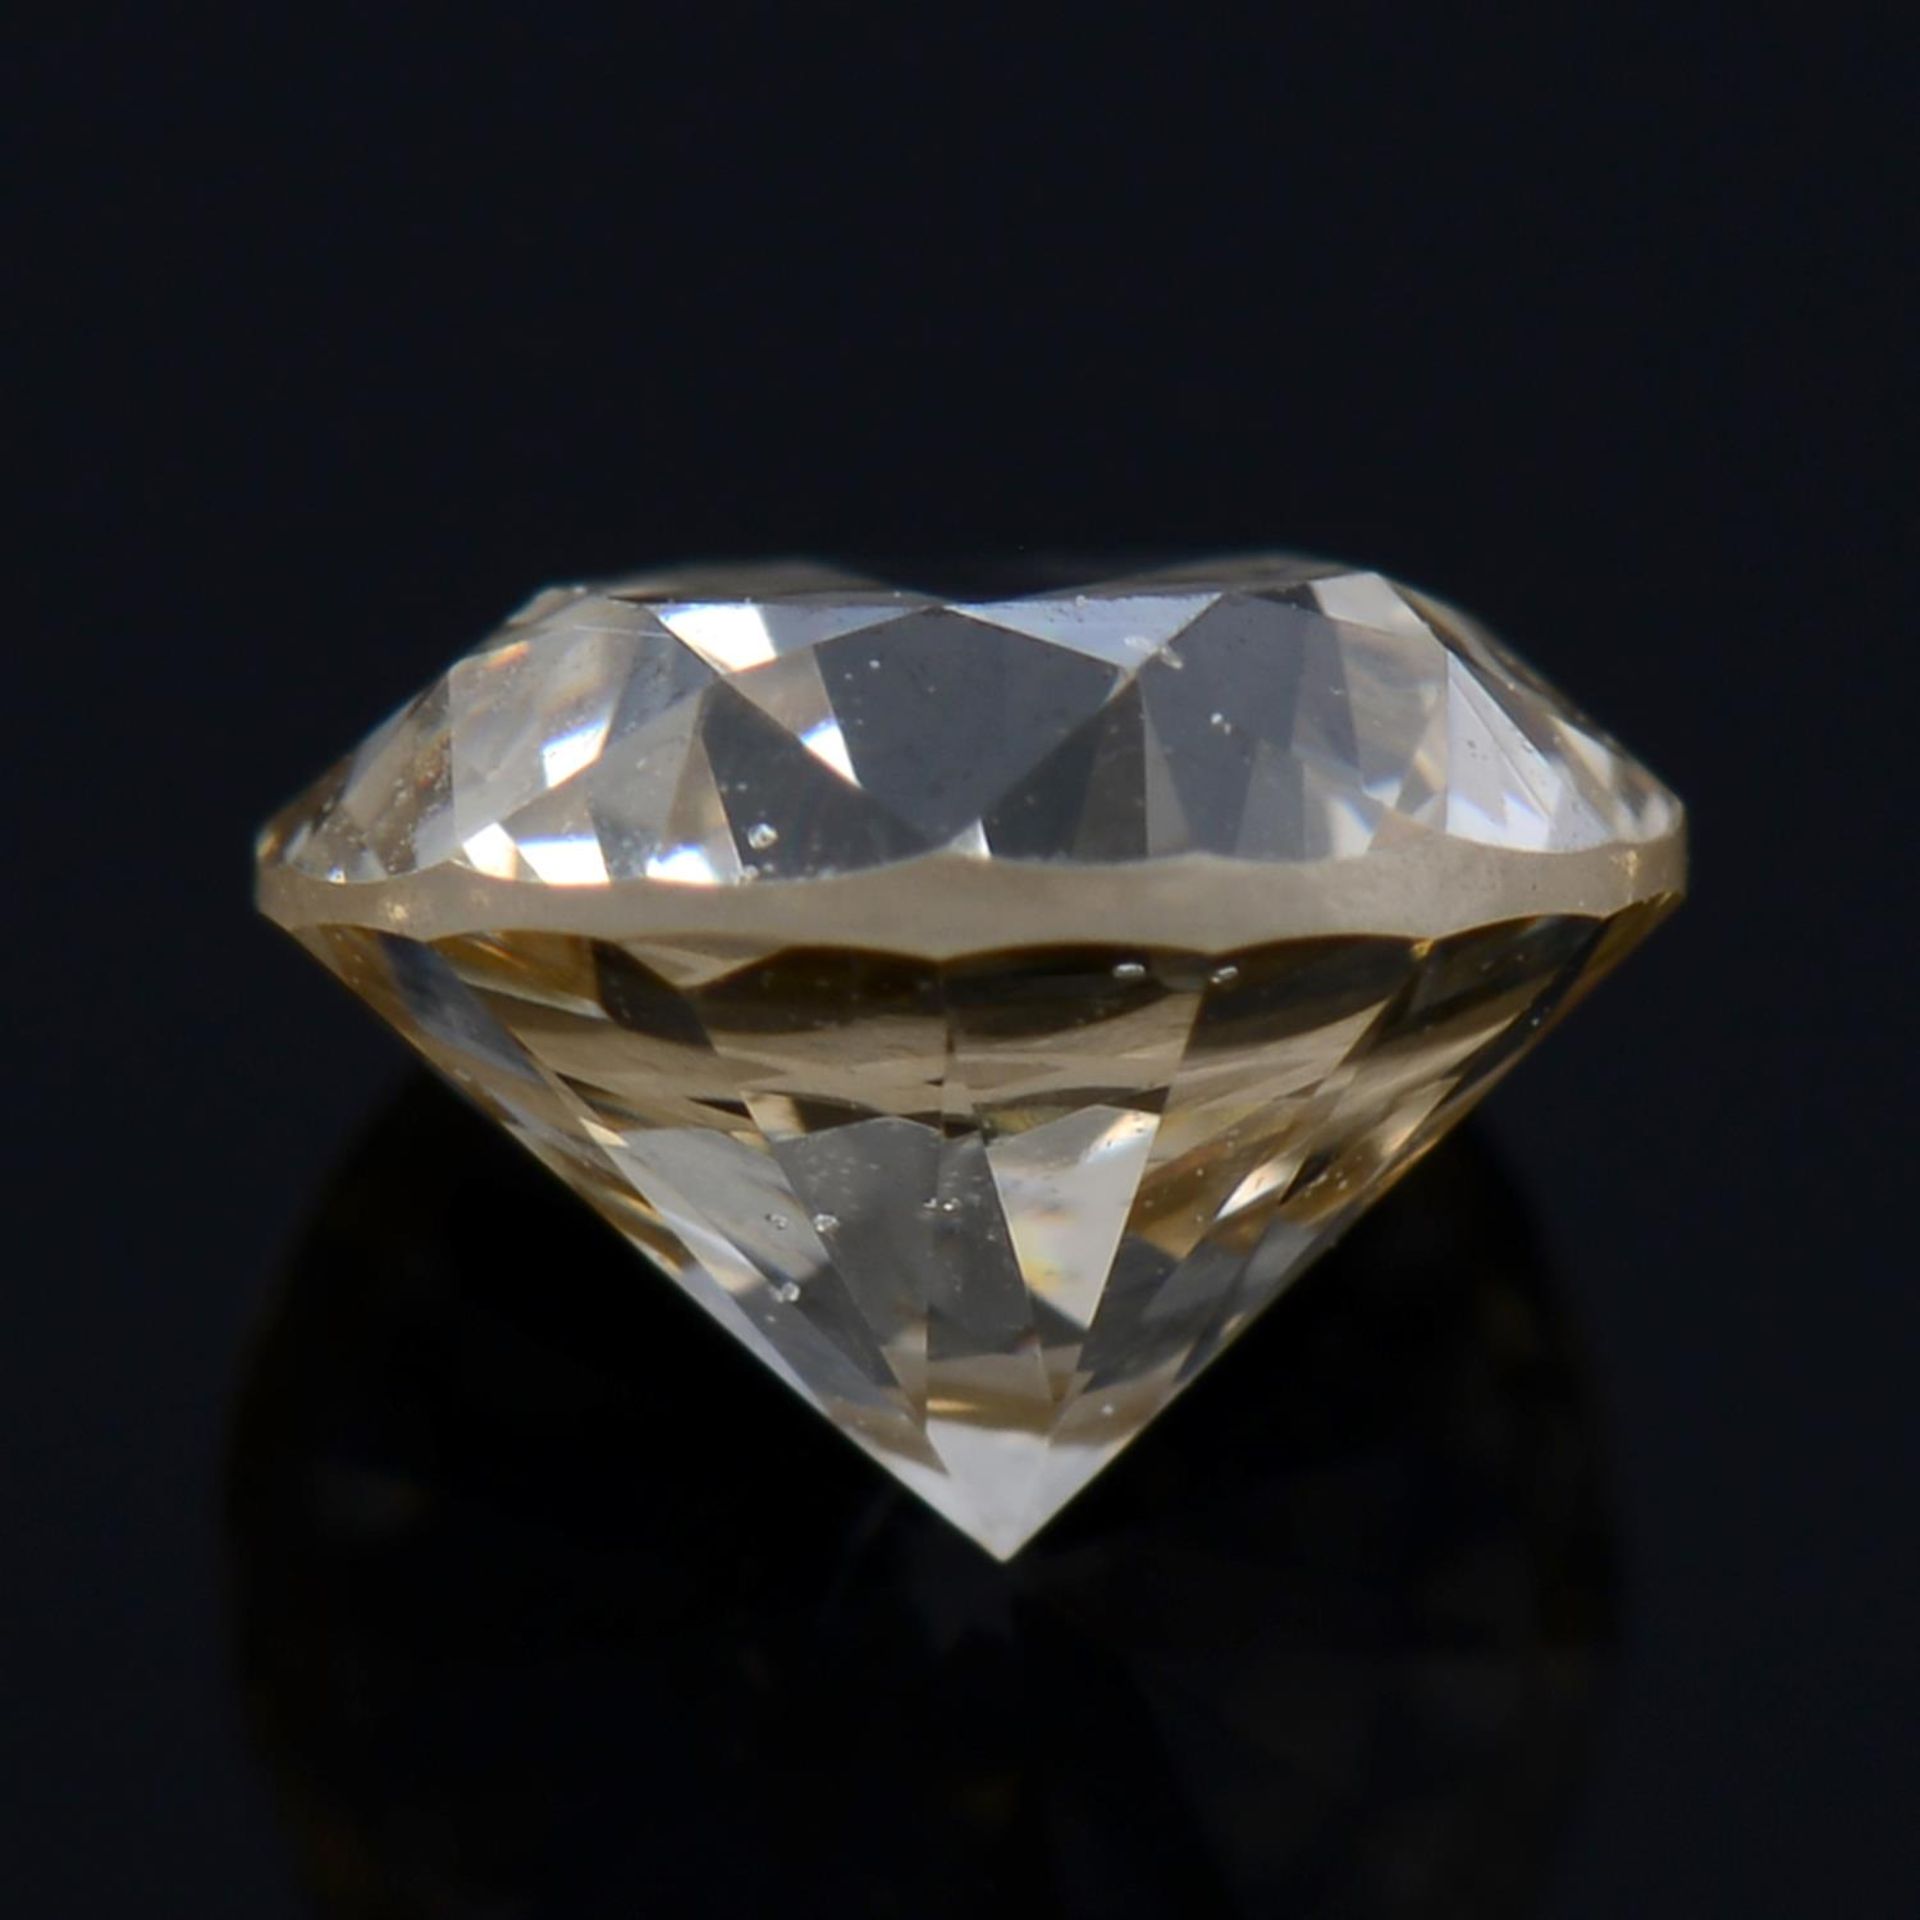 Brilliant-cut diamond, 0.74ct - Image 2 of 2